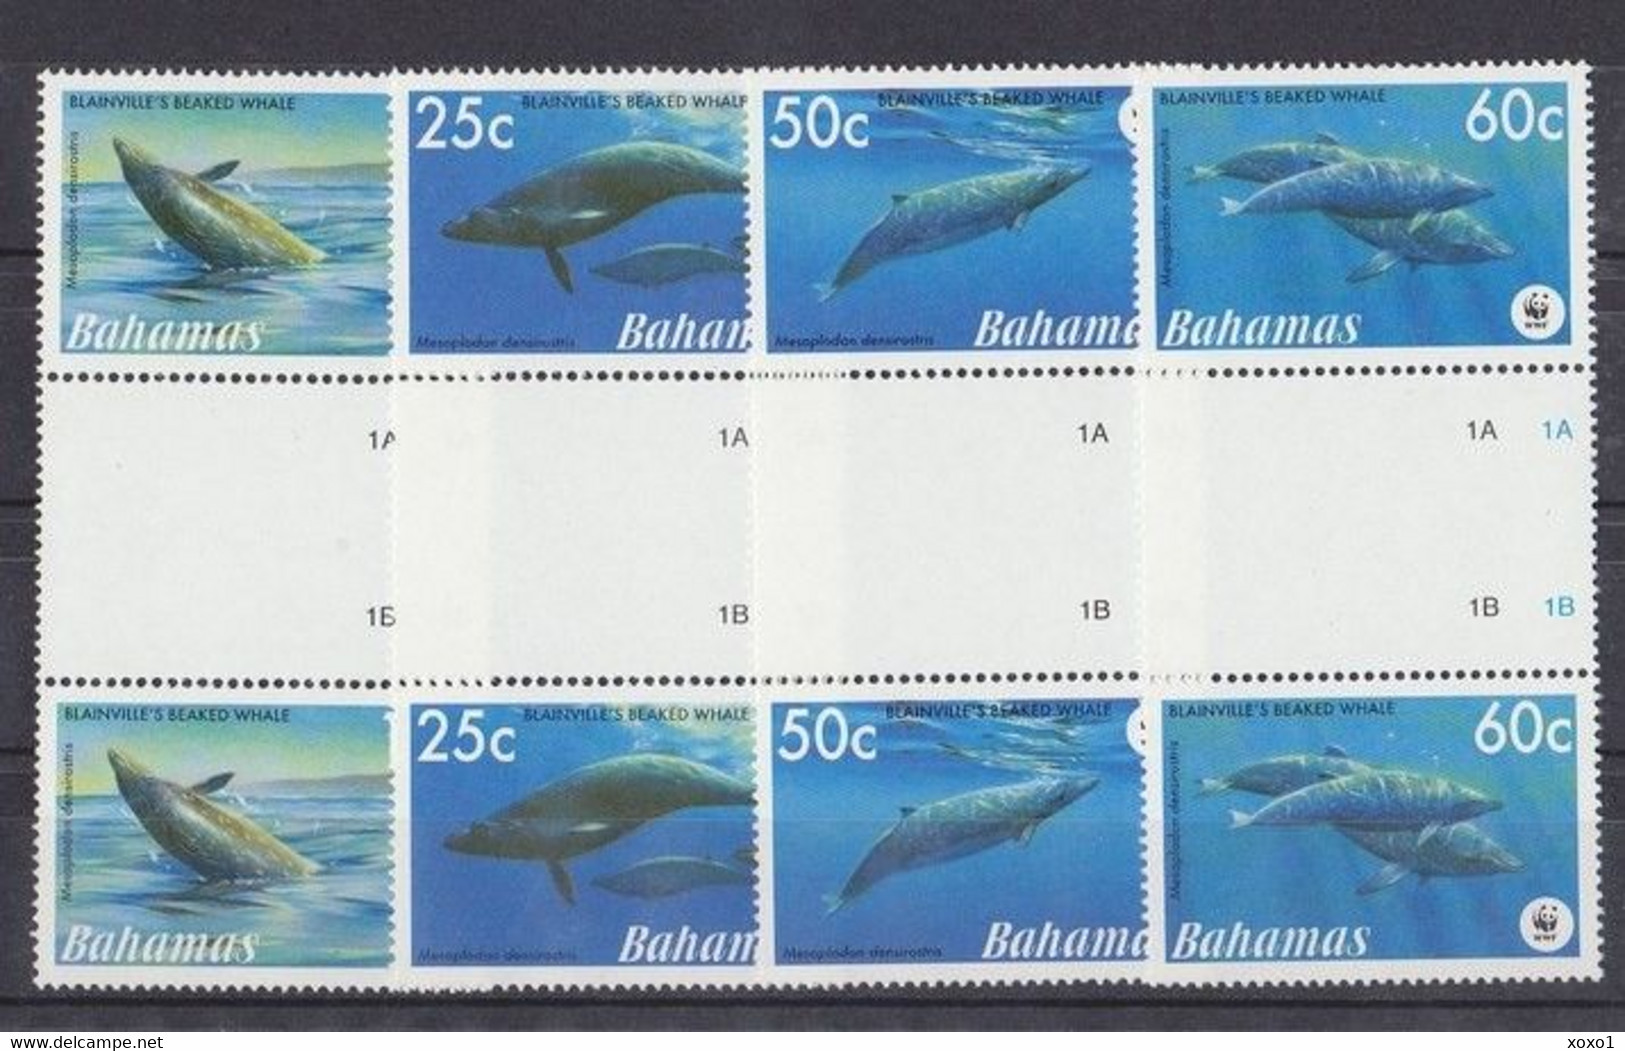 Bahamas 2007 MiNr. 1281 - 1284 WWF Marine Mammals Blainville's Beaked Whales Gutter Pair 8v MNH** 7.20 € - Ungebraucht